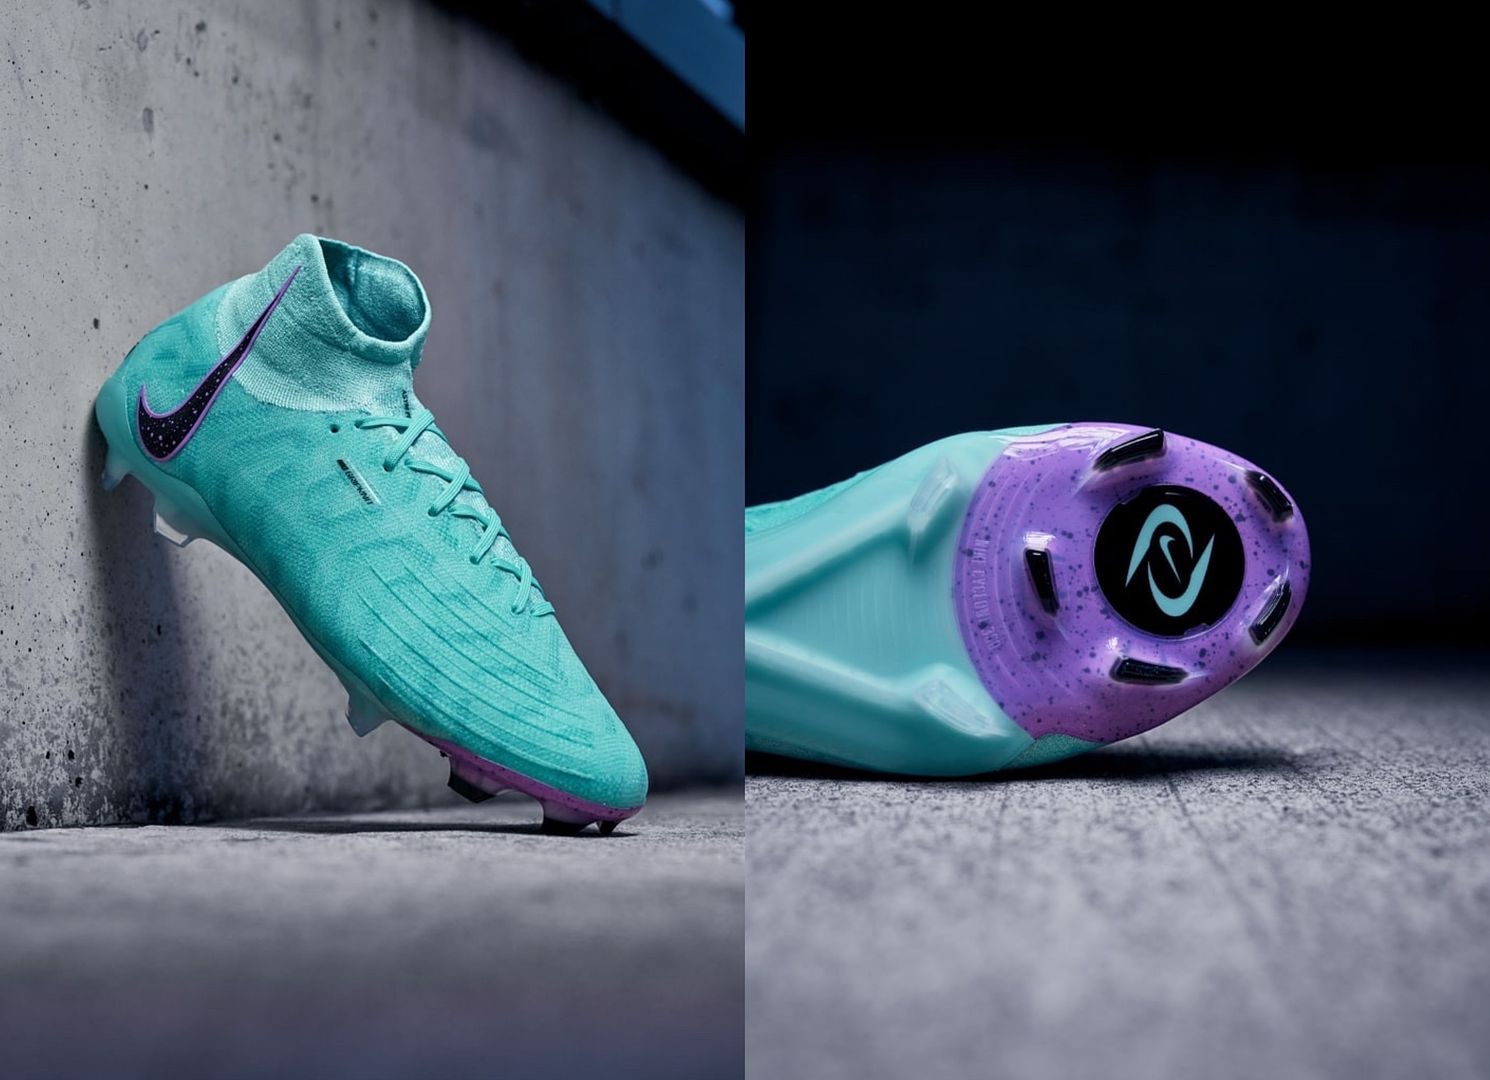 Pack giày Nike Peak Ready lấy cảm hứng từ UEFA Champions League